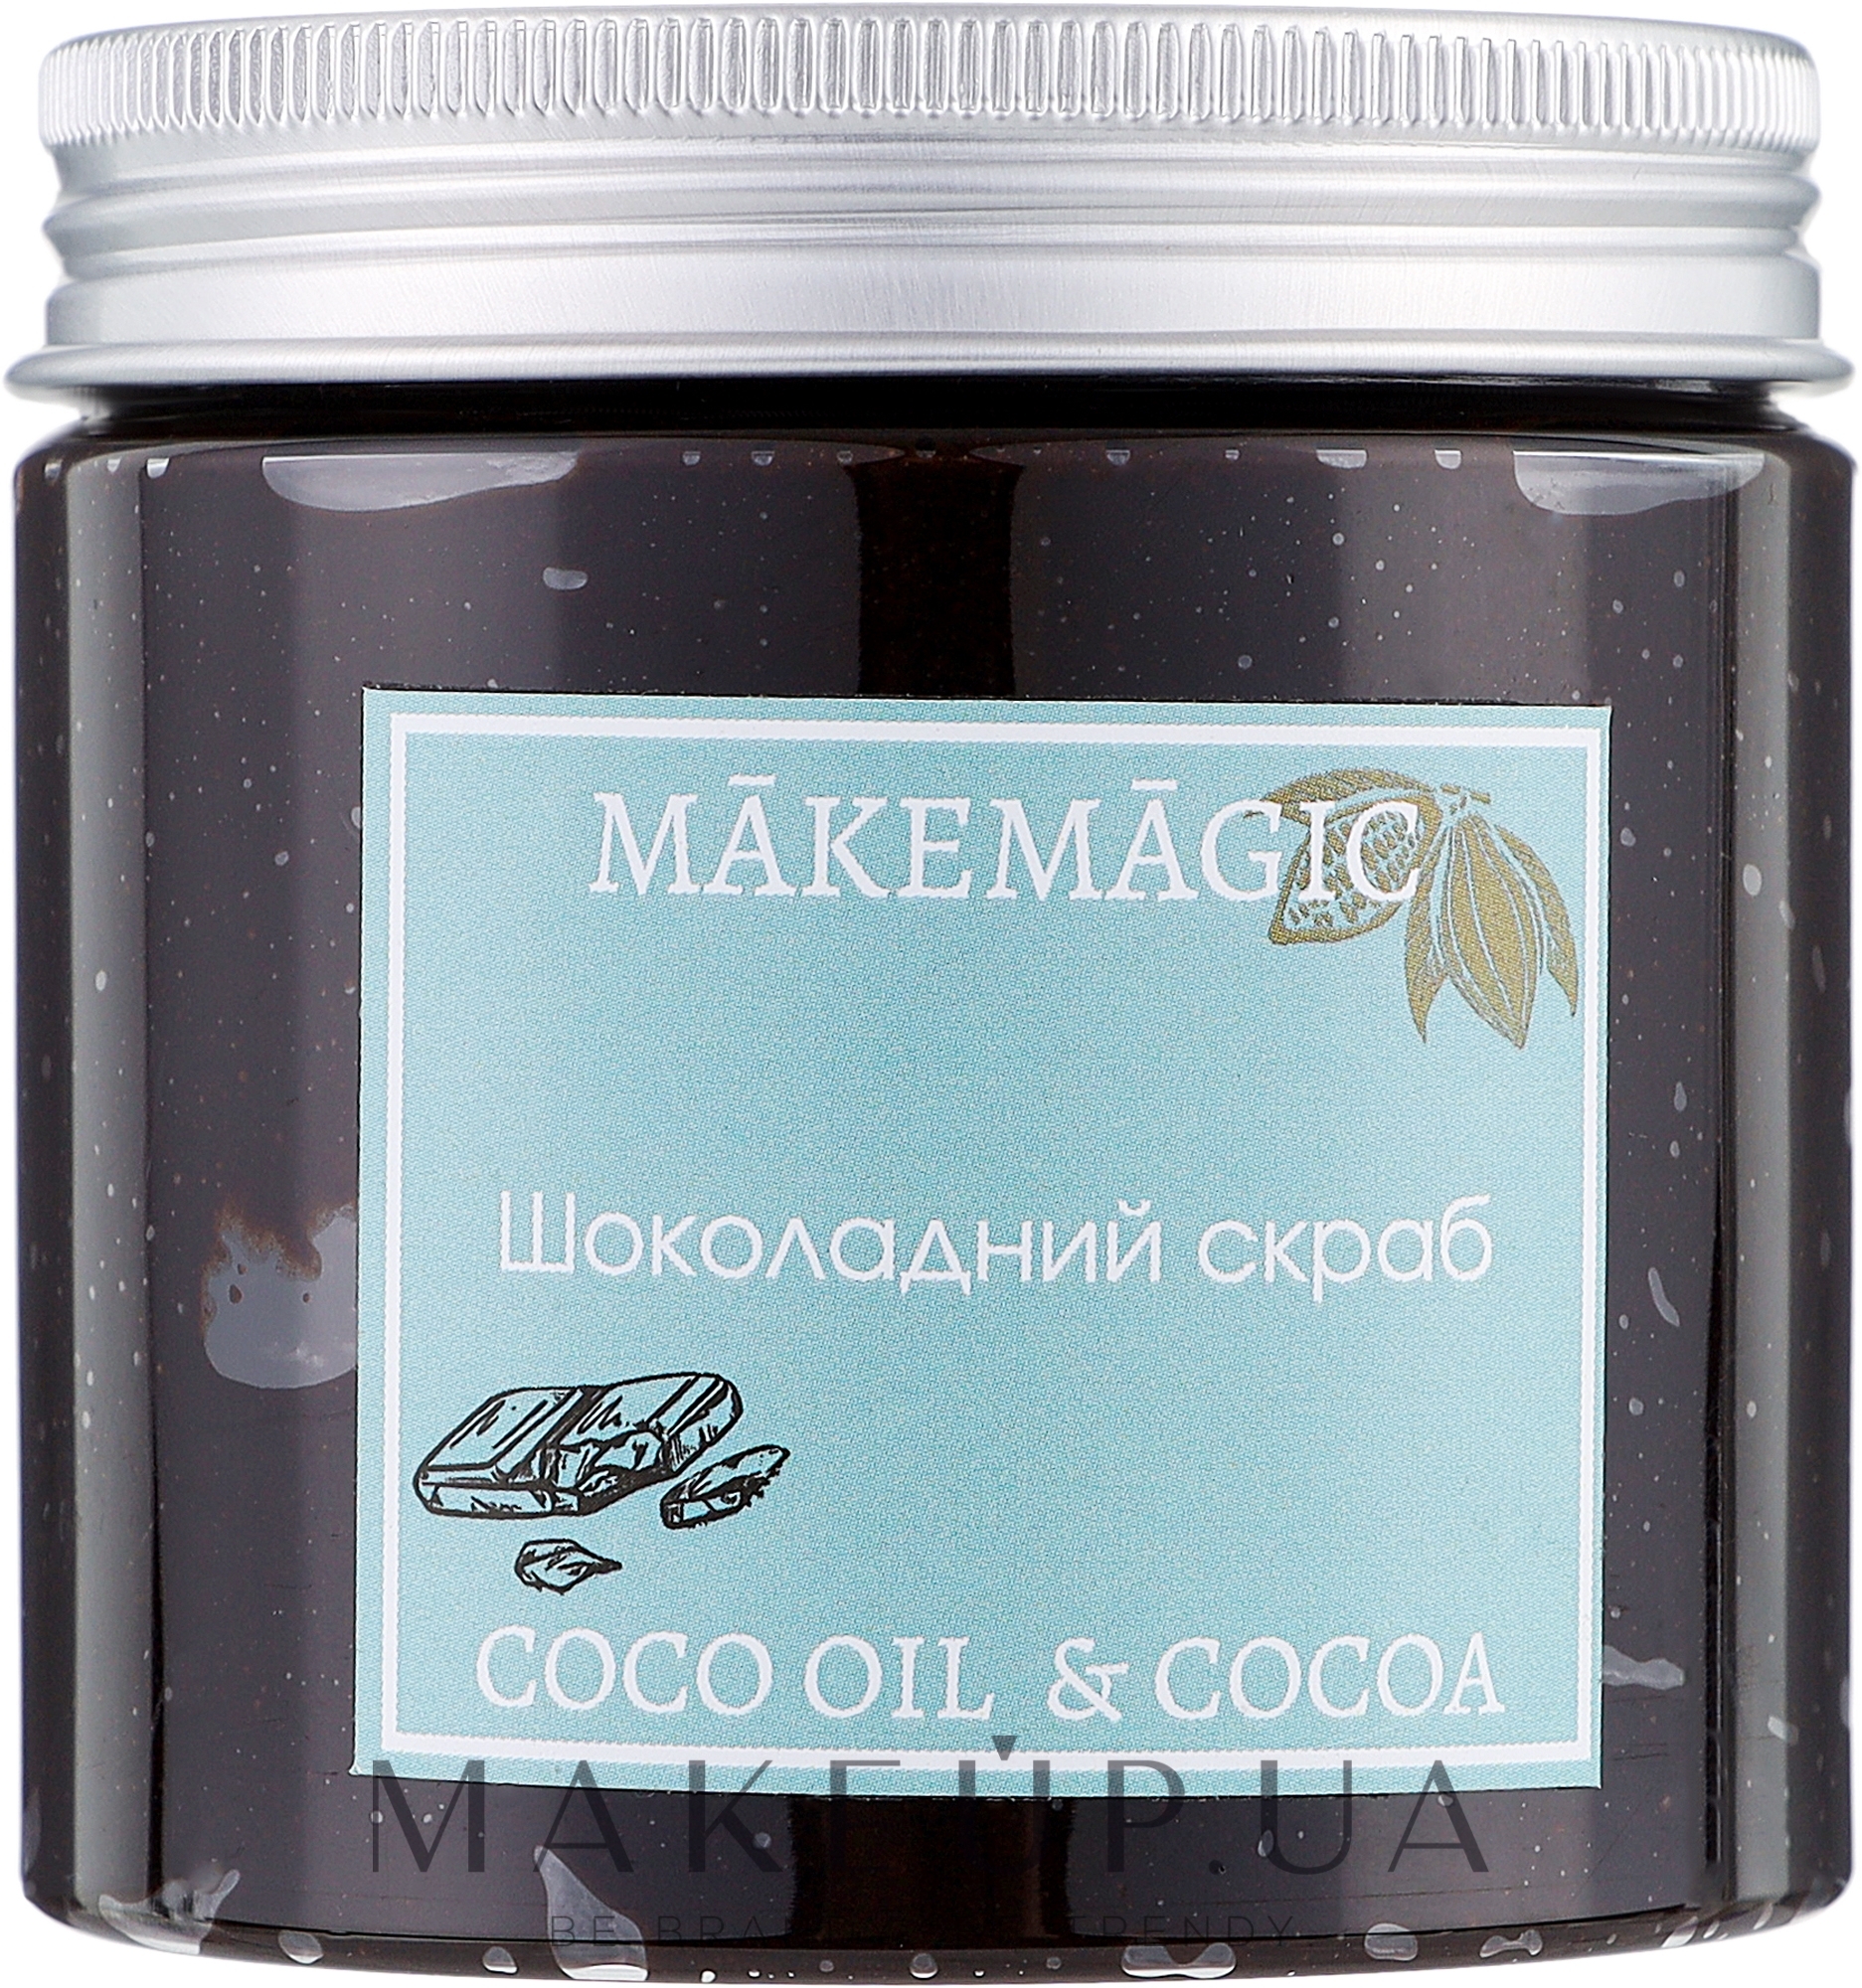 Шоколадный скраб для тела - Makemagic Coco Oil & Cocoa — фото 200g